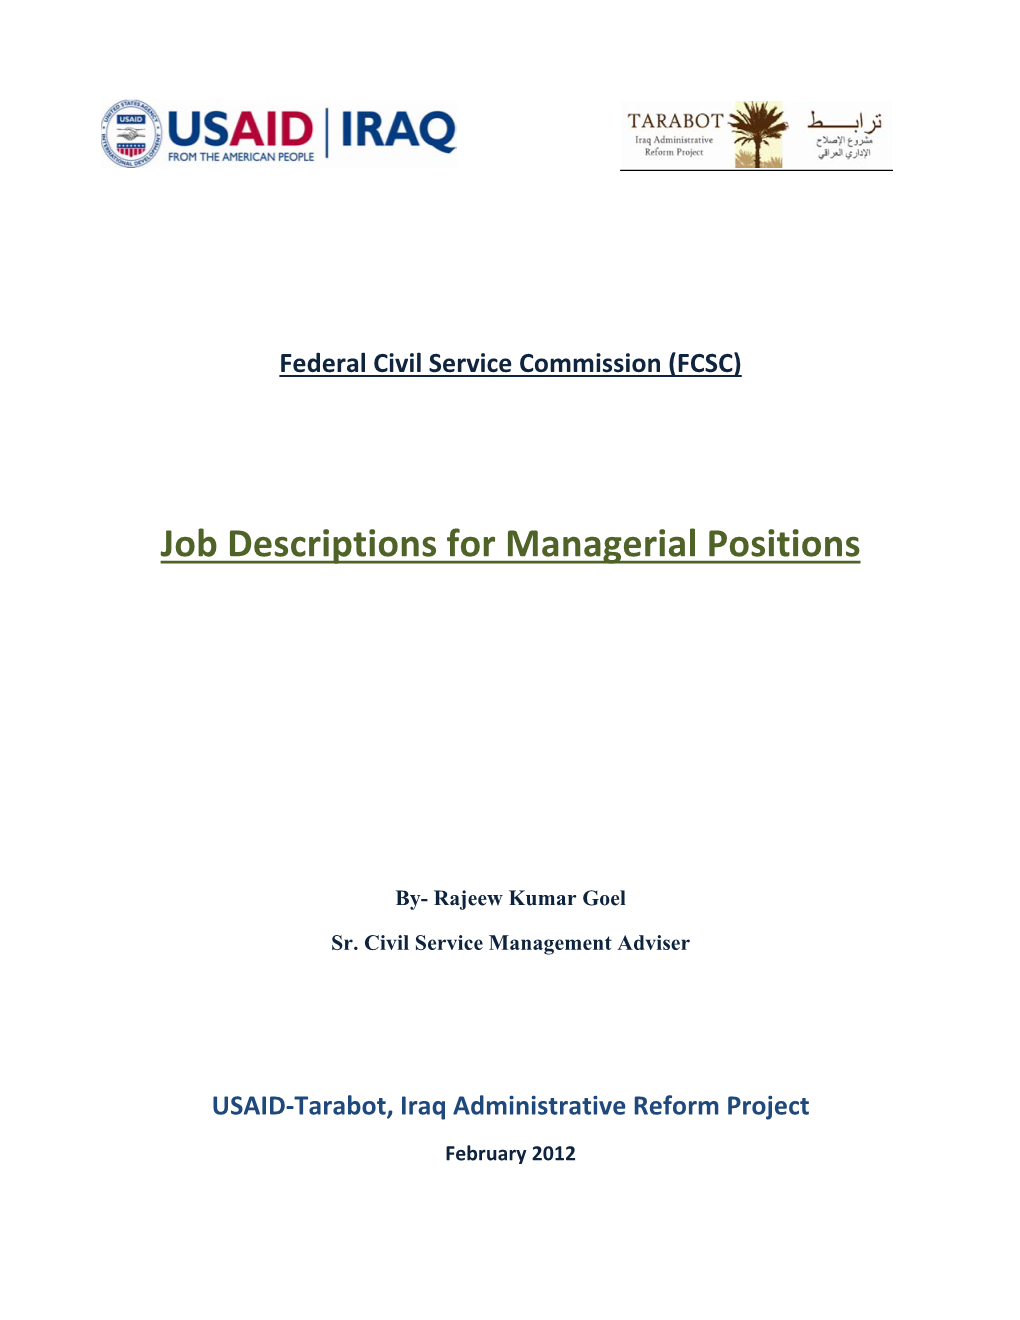 Federal Civil Service Commission (FCSC) Job Descriptions For